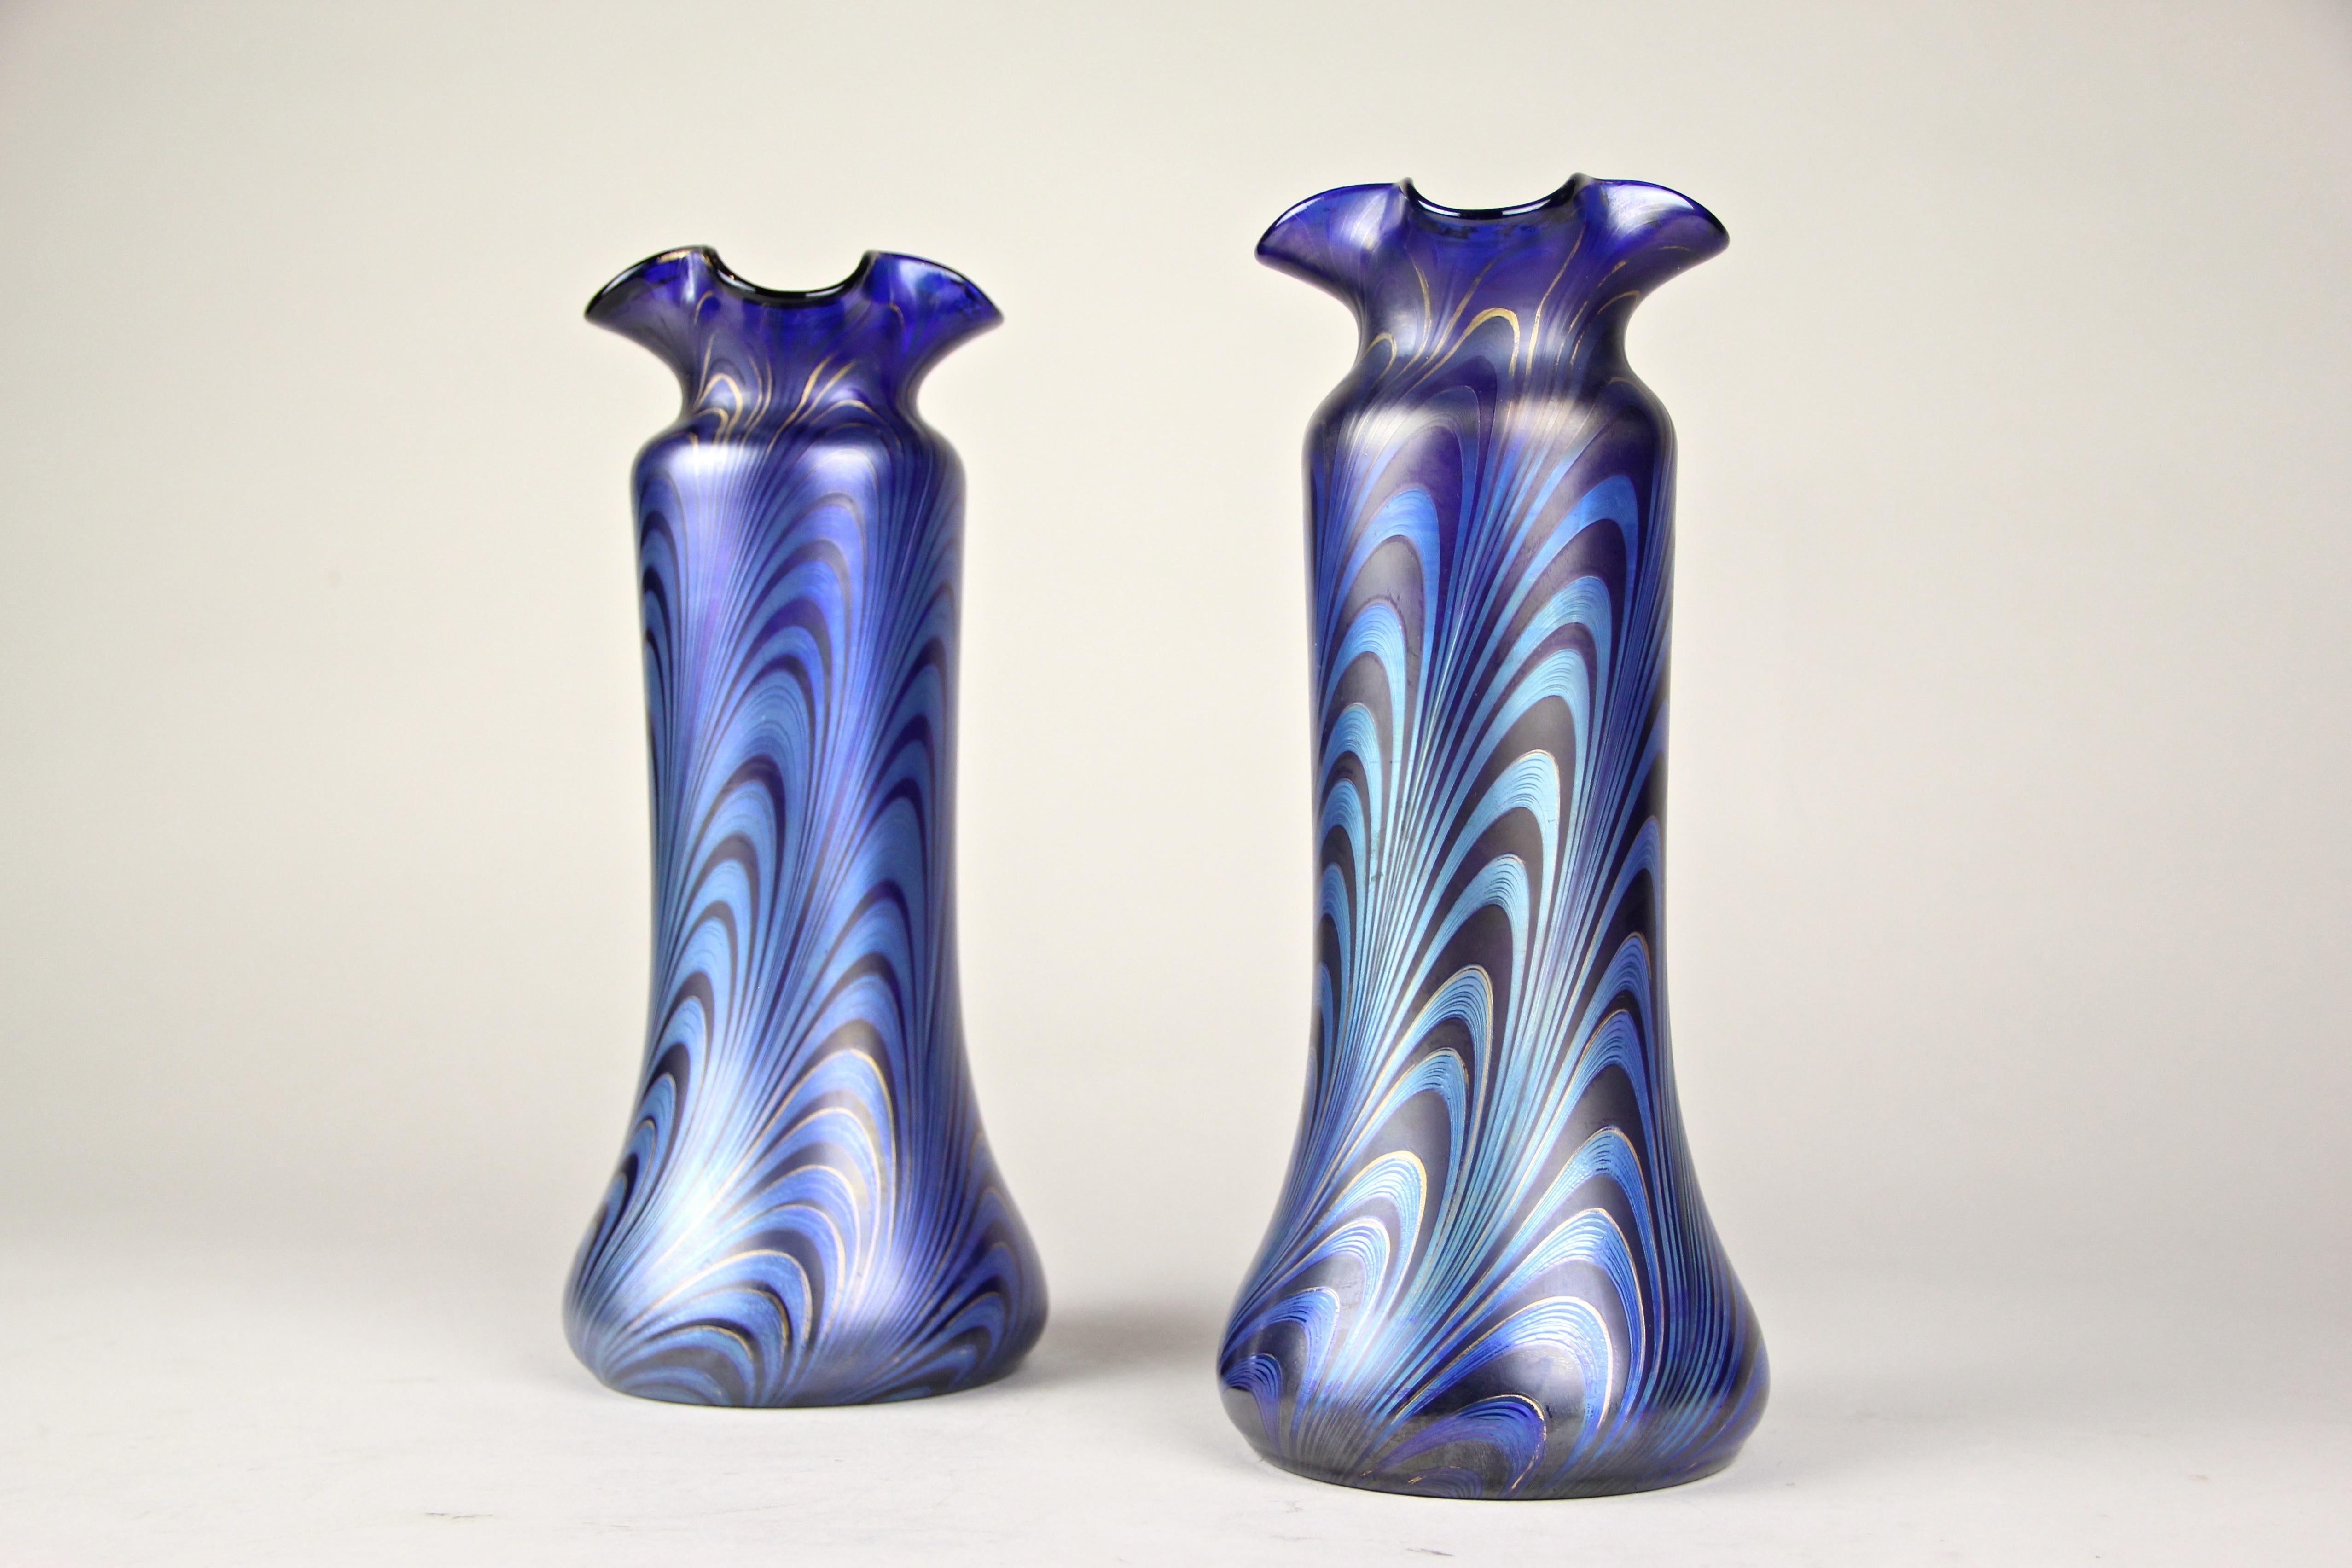 19th Century Pair of Loetz Witwe Glass Vases Phaenomen Genre 7624, Bohemia, circa 1898